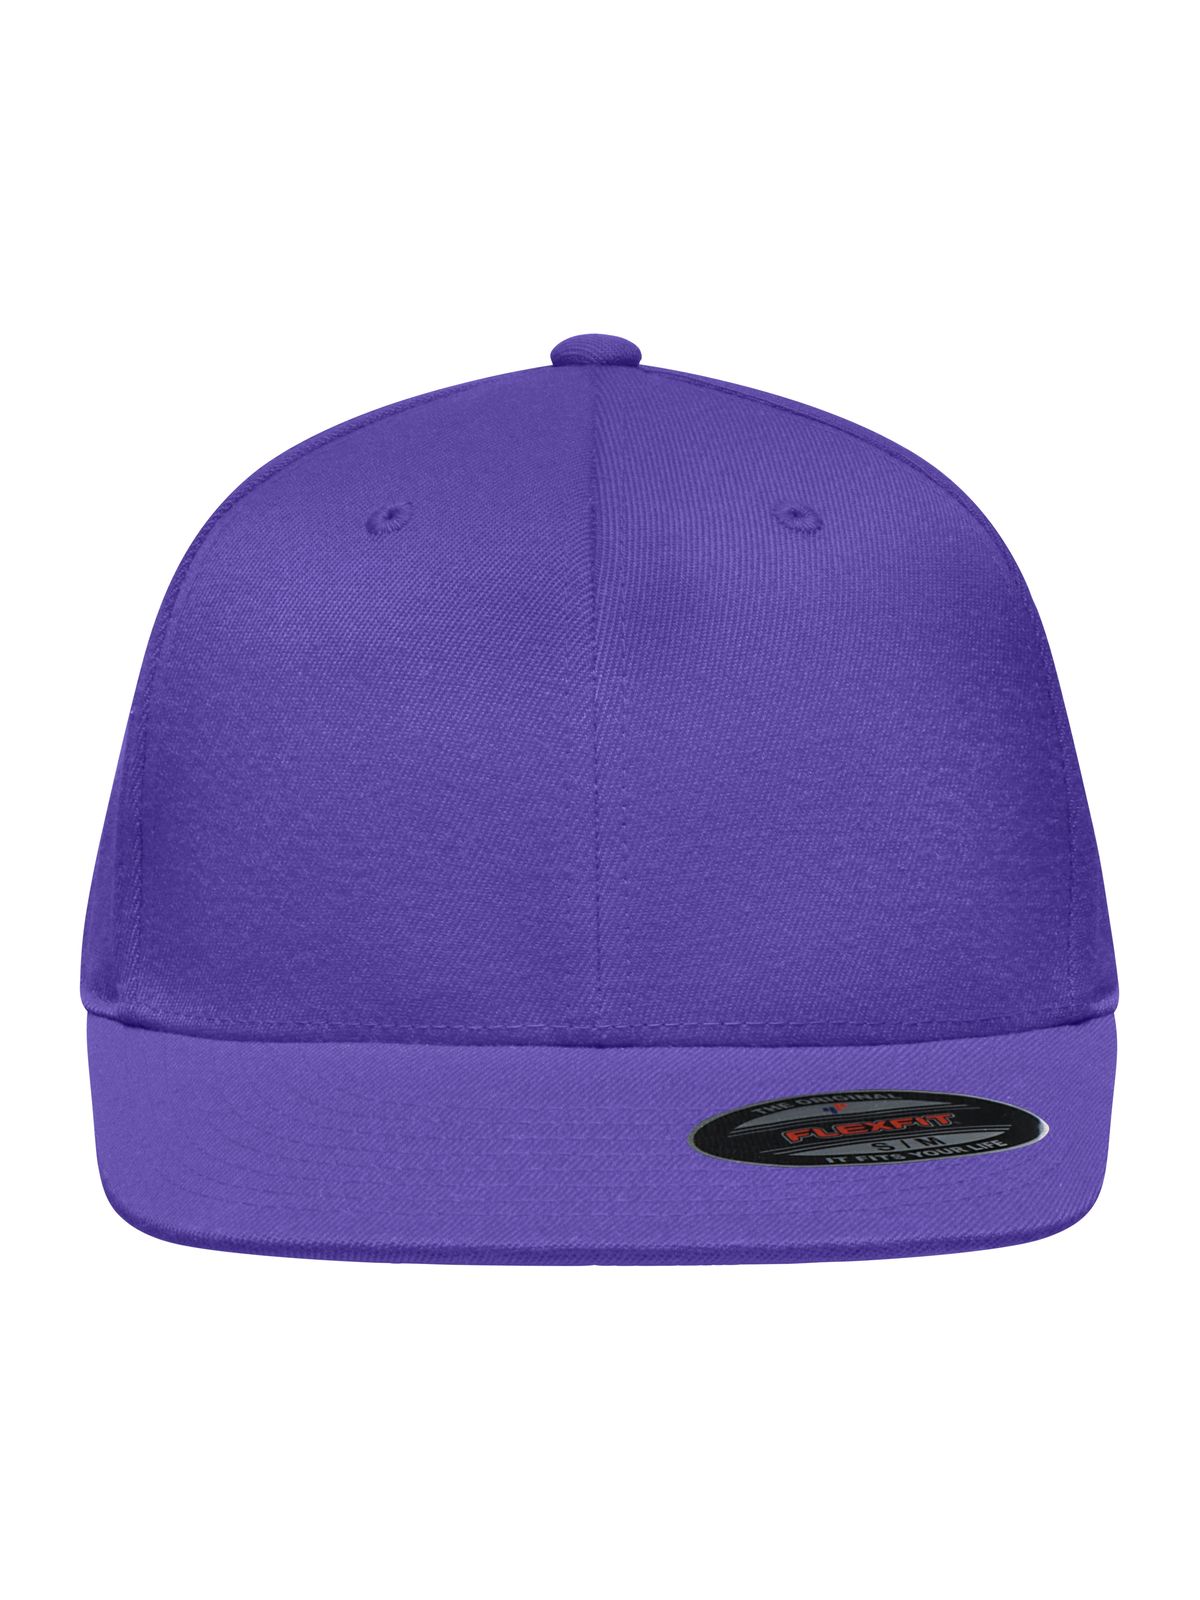 flexfitr-flat-peak-cap-purple.webp